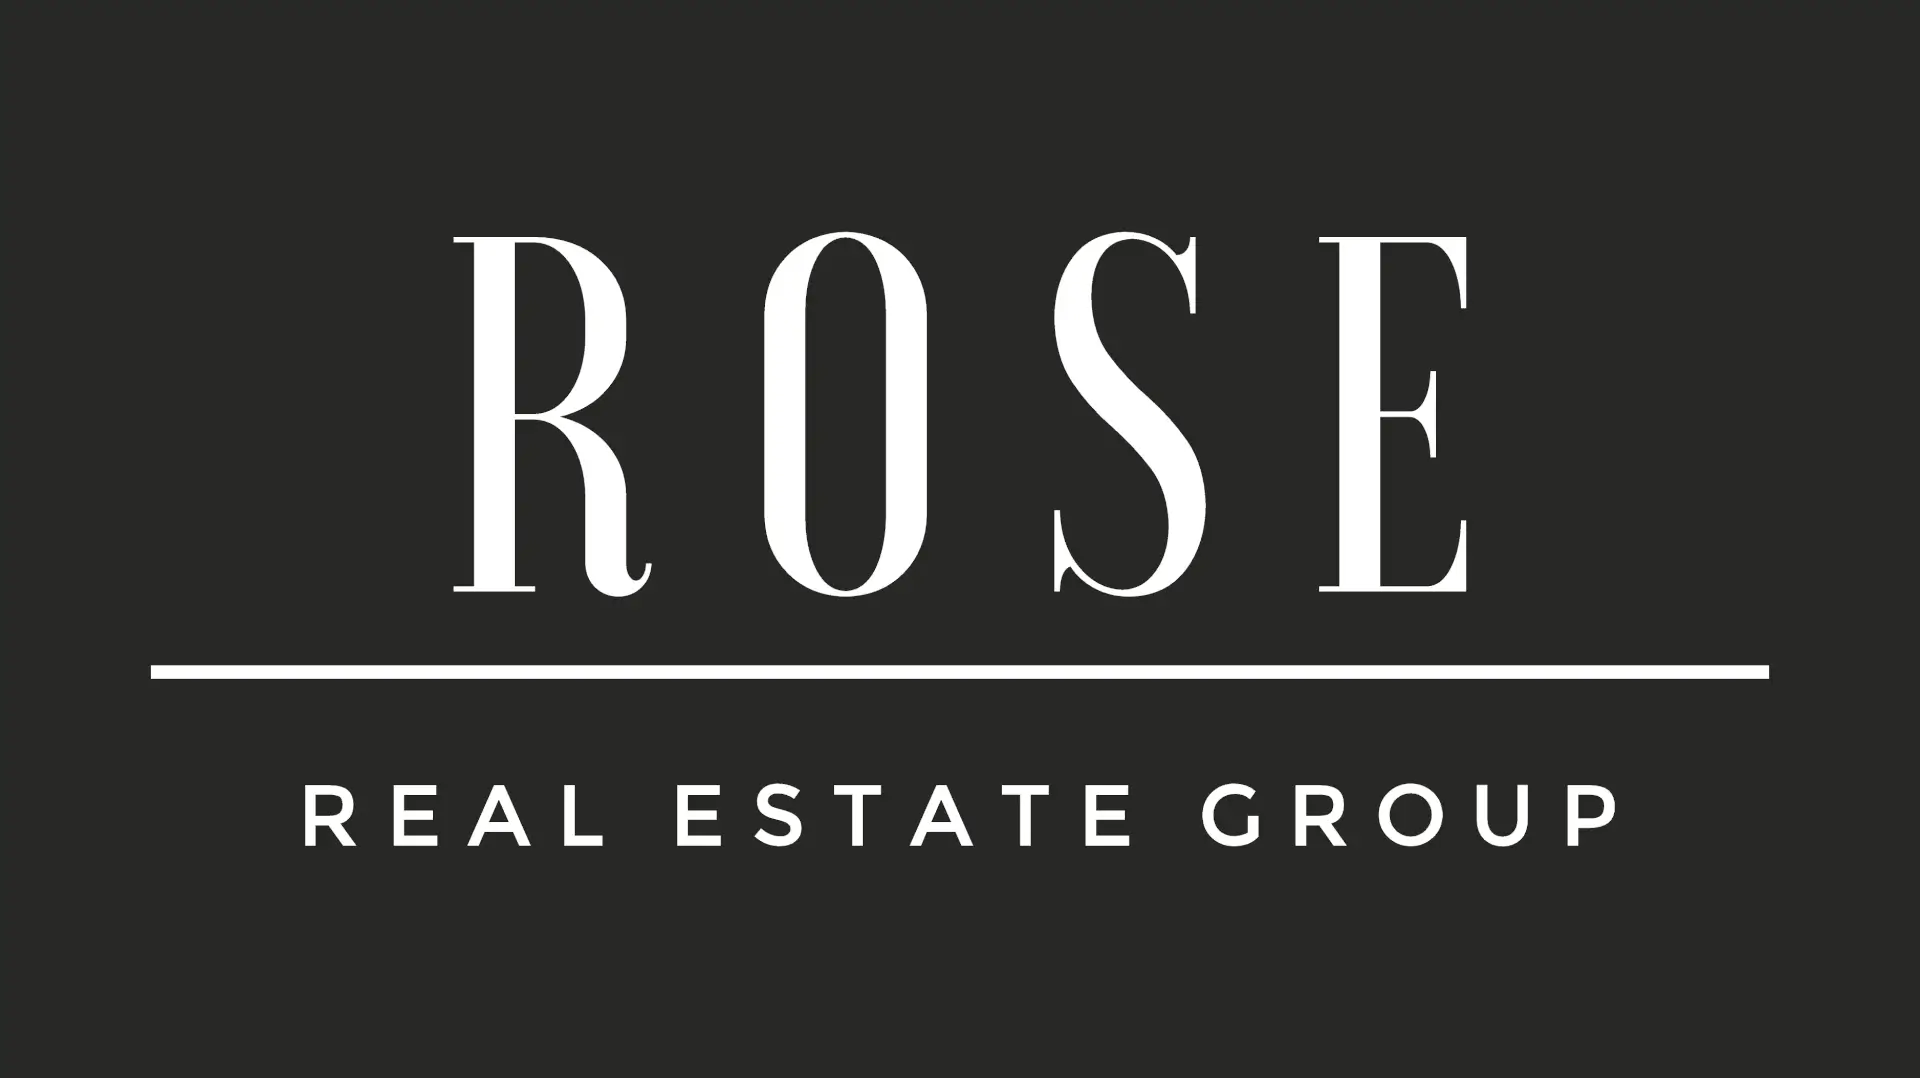 Stephen Scott Rose dba Rose Real Estate Group